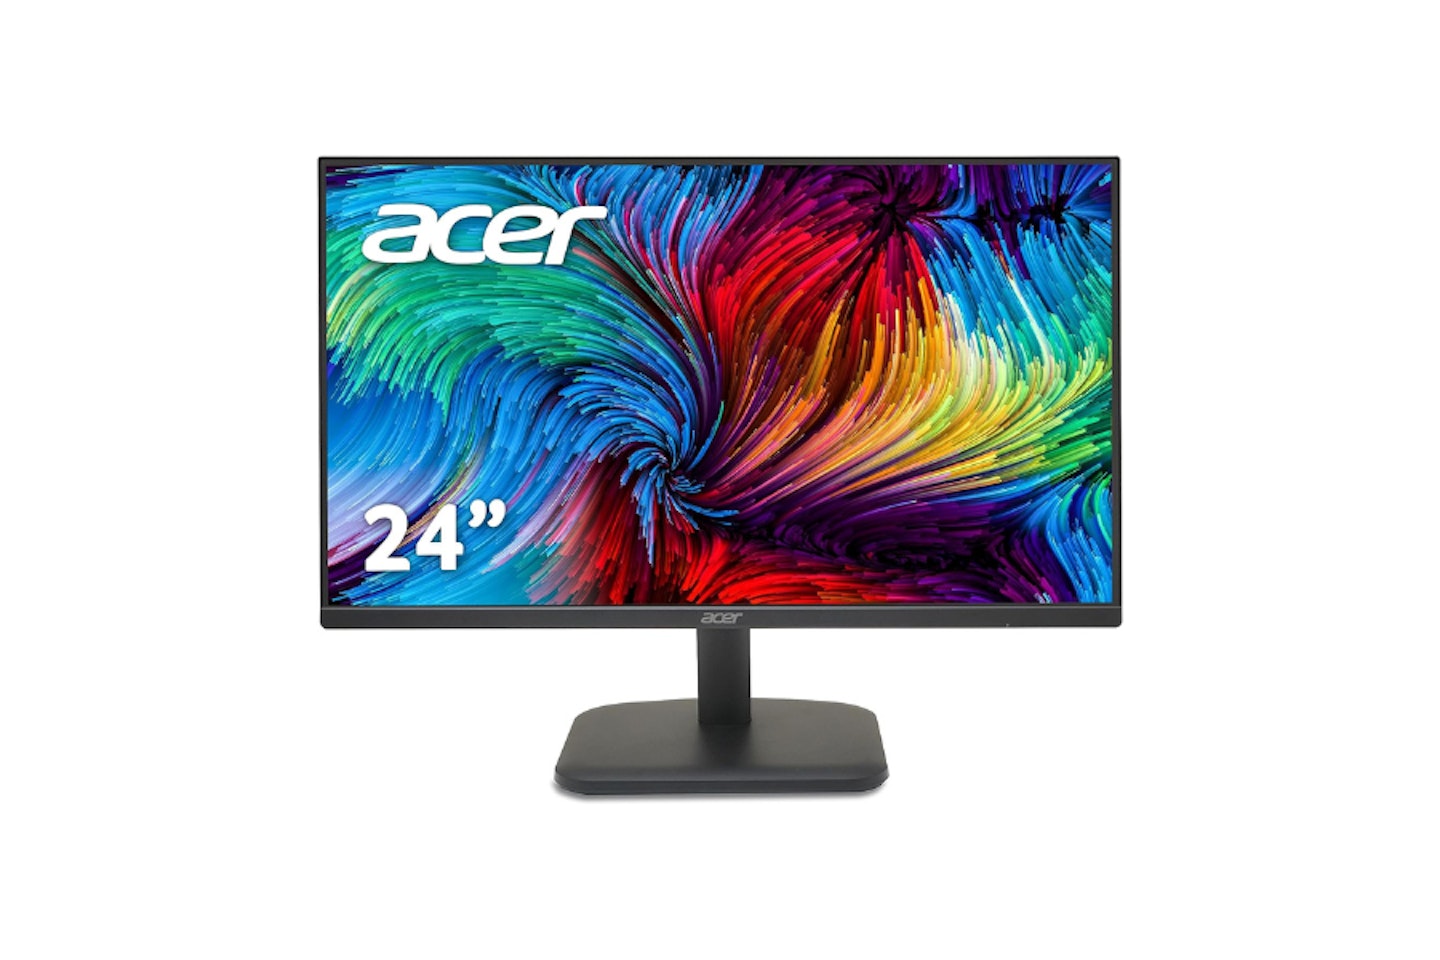 Acer EK241YHbif 24-inch Monitor